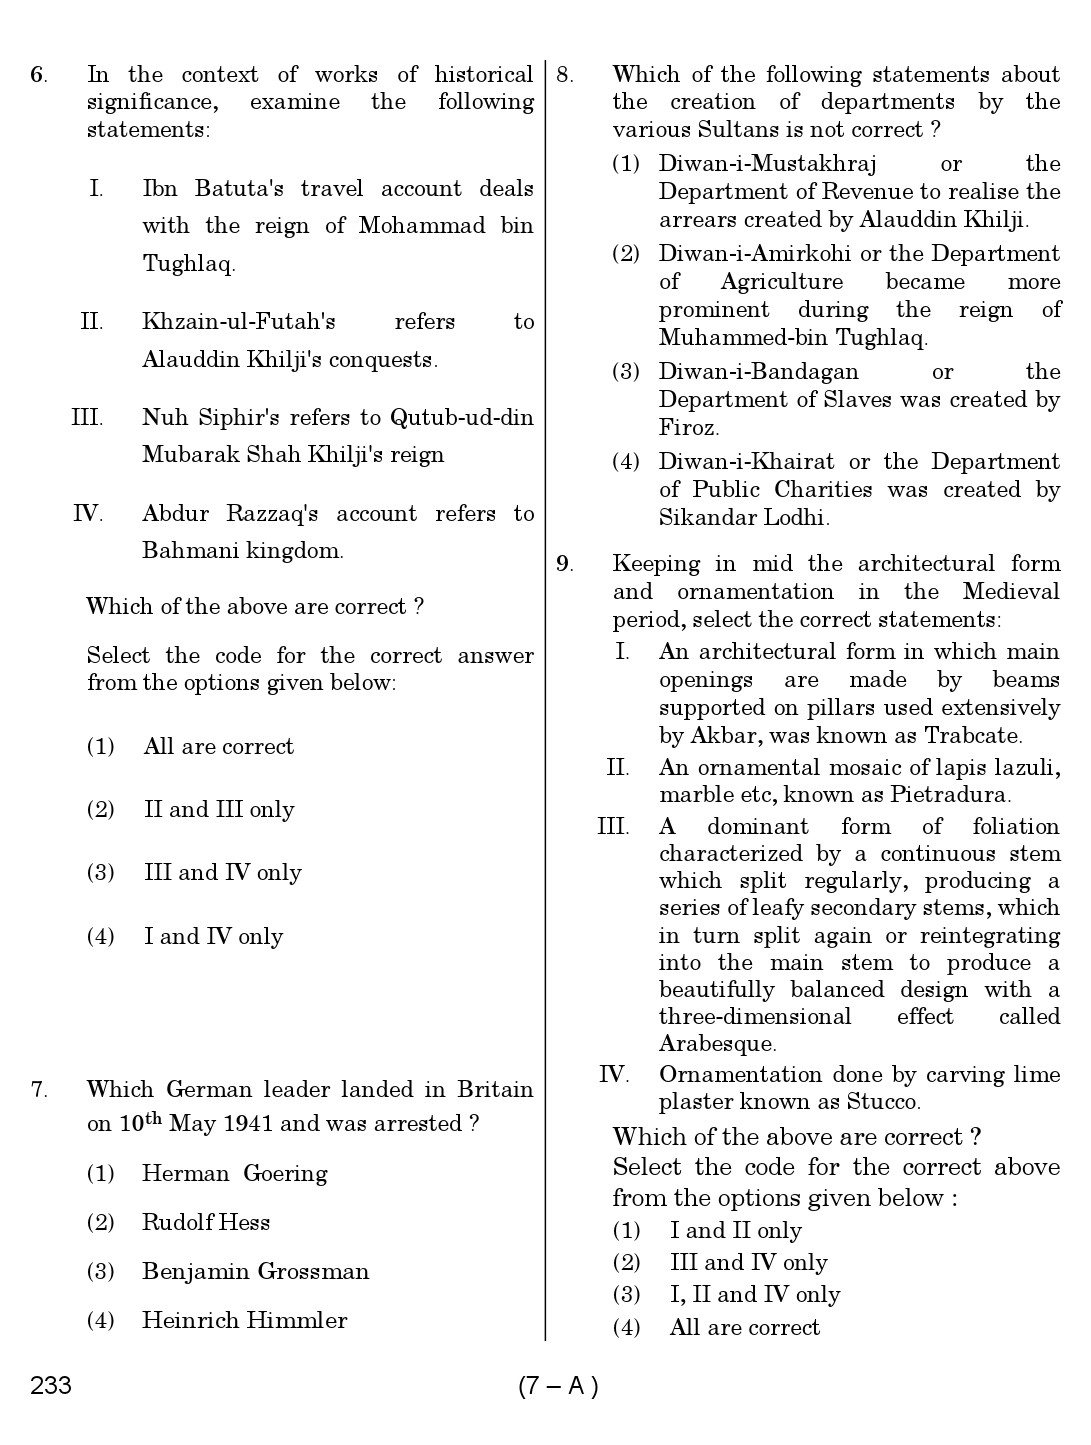 Karnataka PSC History Teacher Exam Sample Question Paper Subject code 233 7